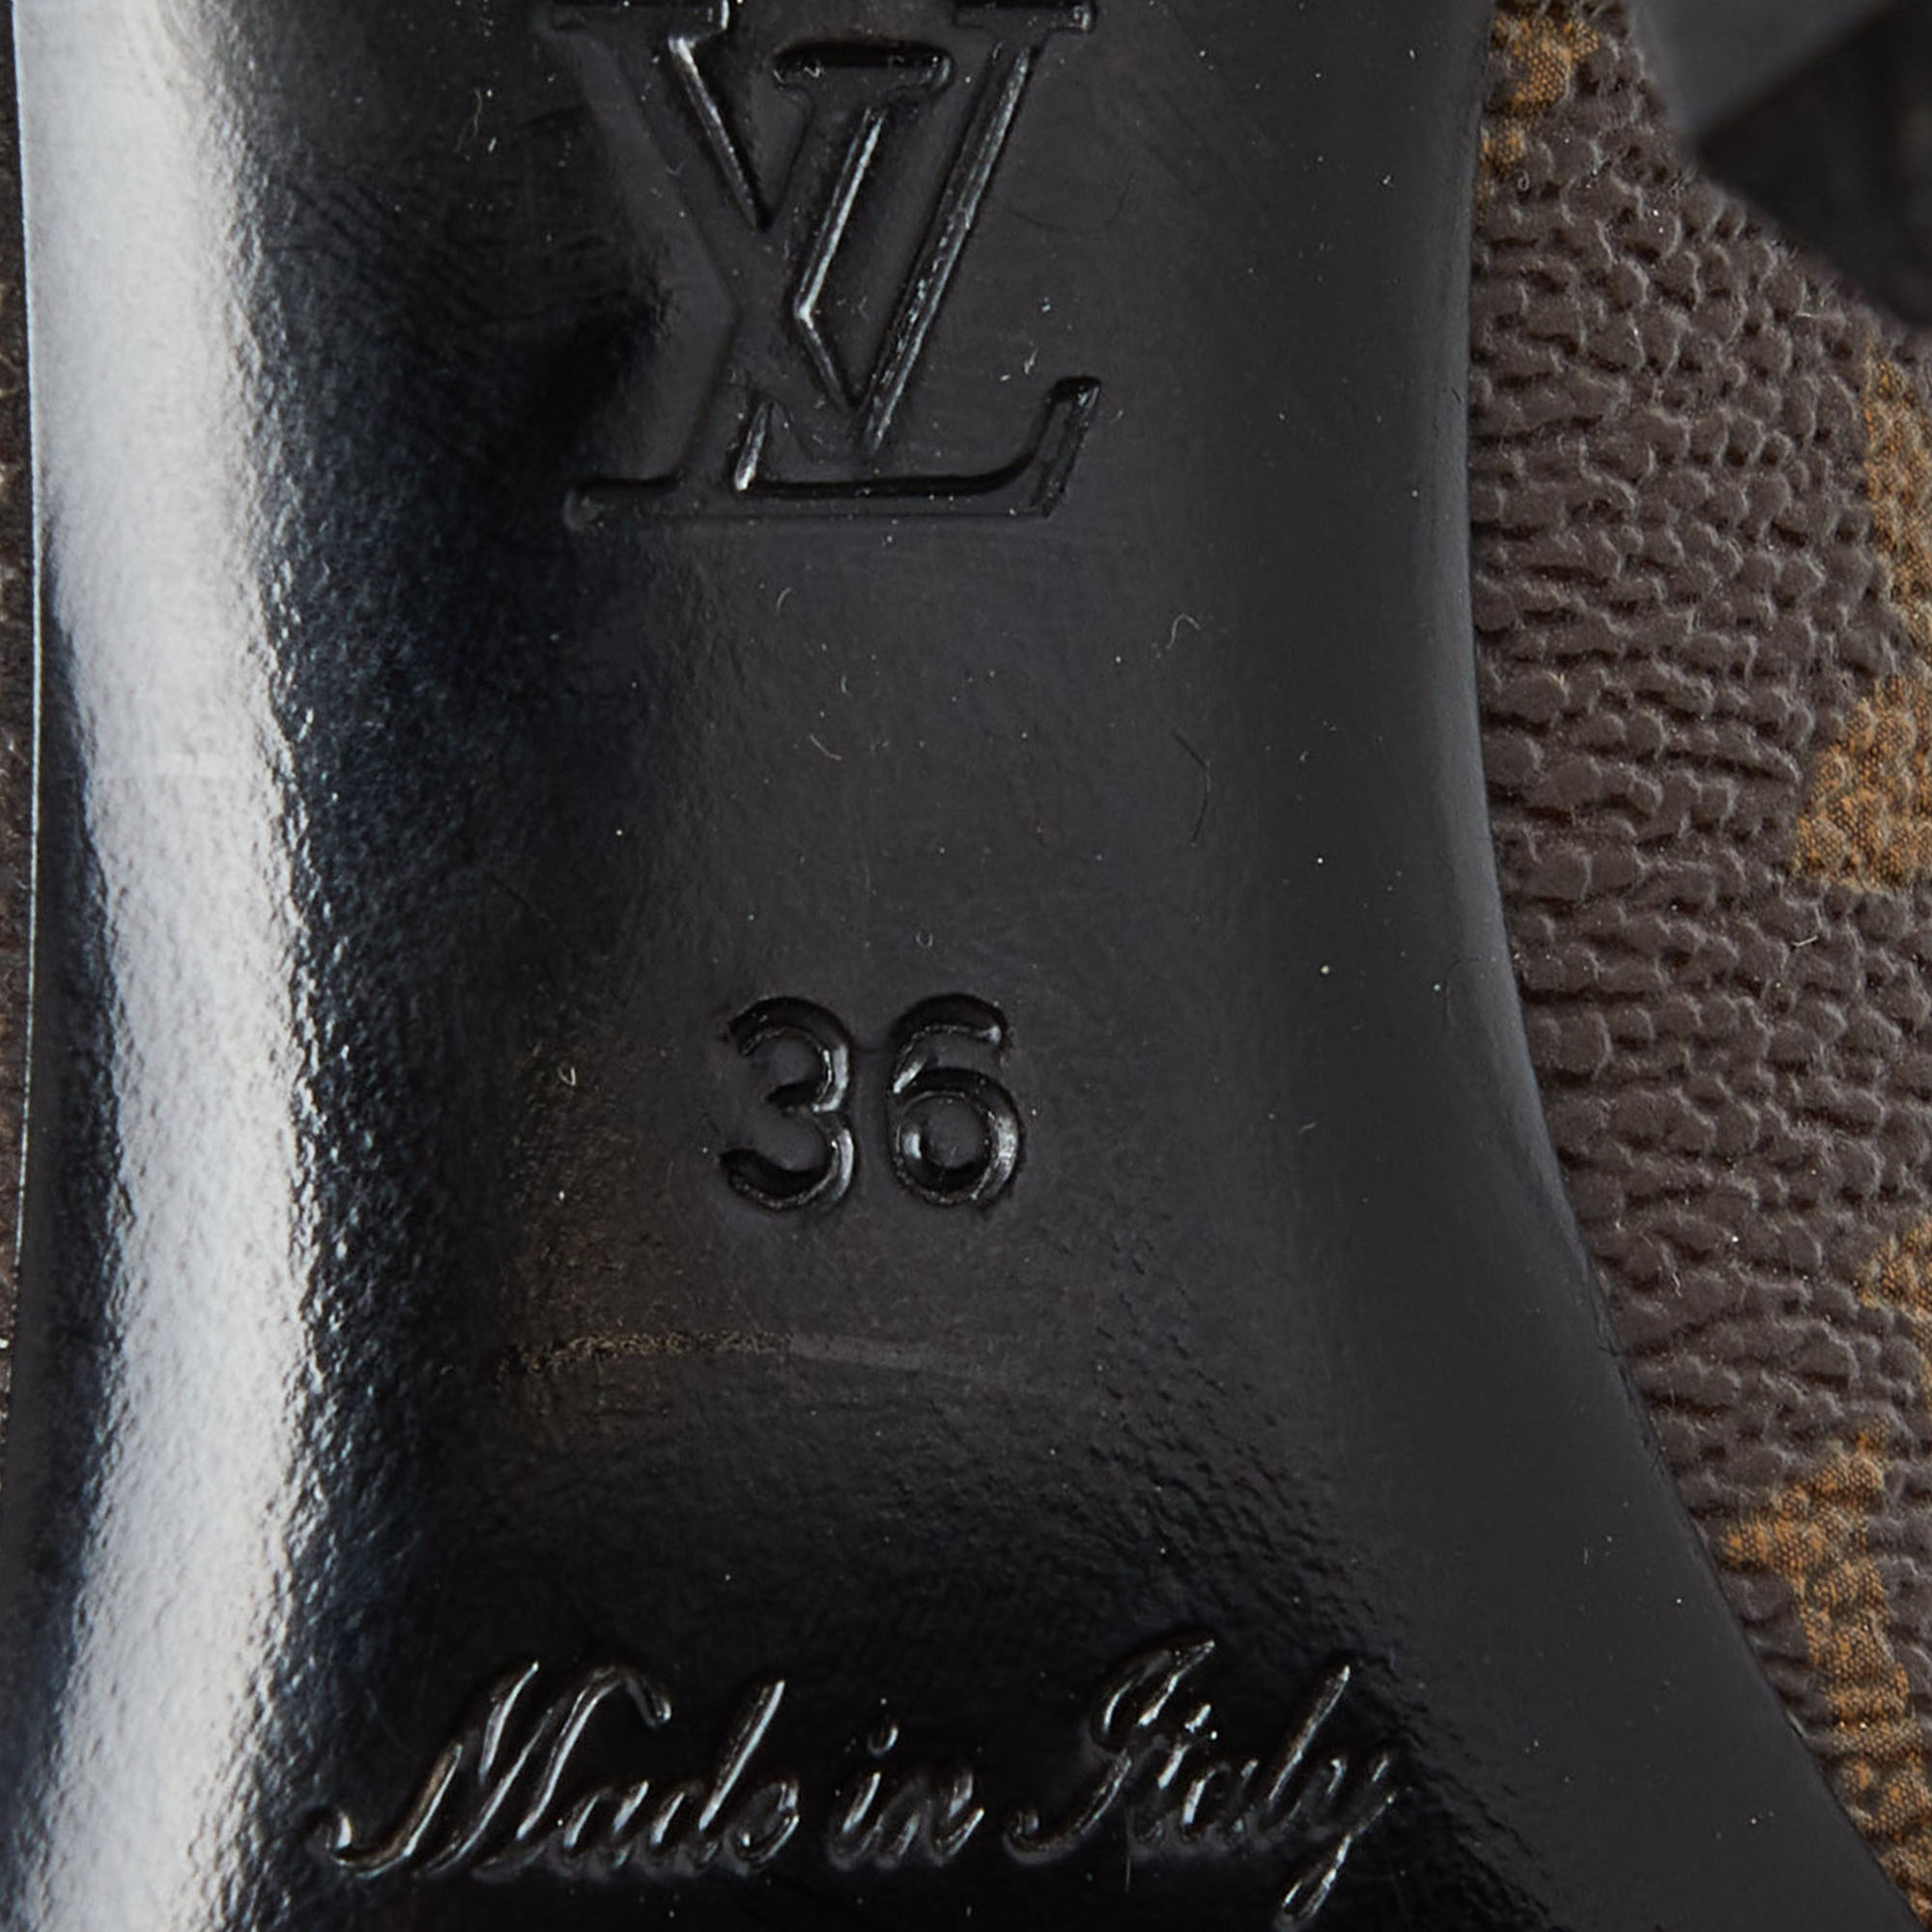 Louis Vuitton Brown Monogram Canvas And Leather Trim Eldorado Pointed Toe Pumps Size 36